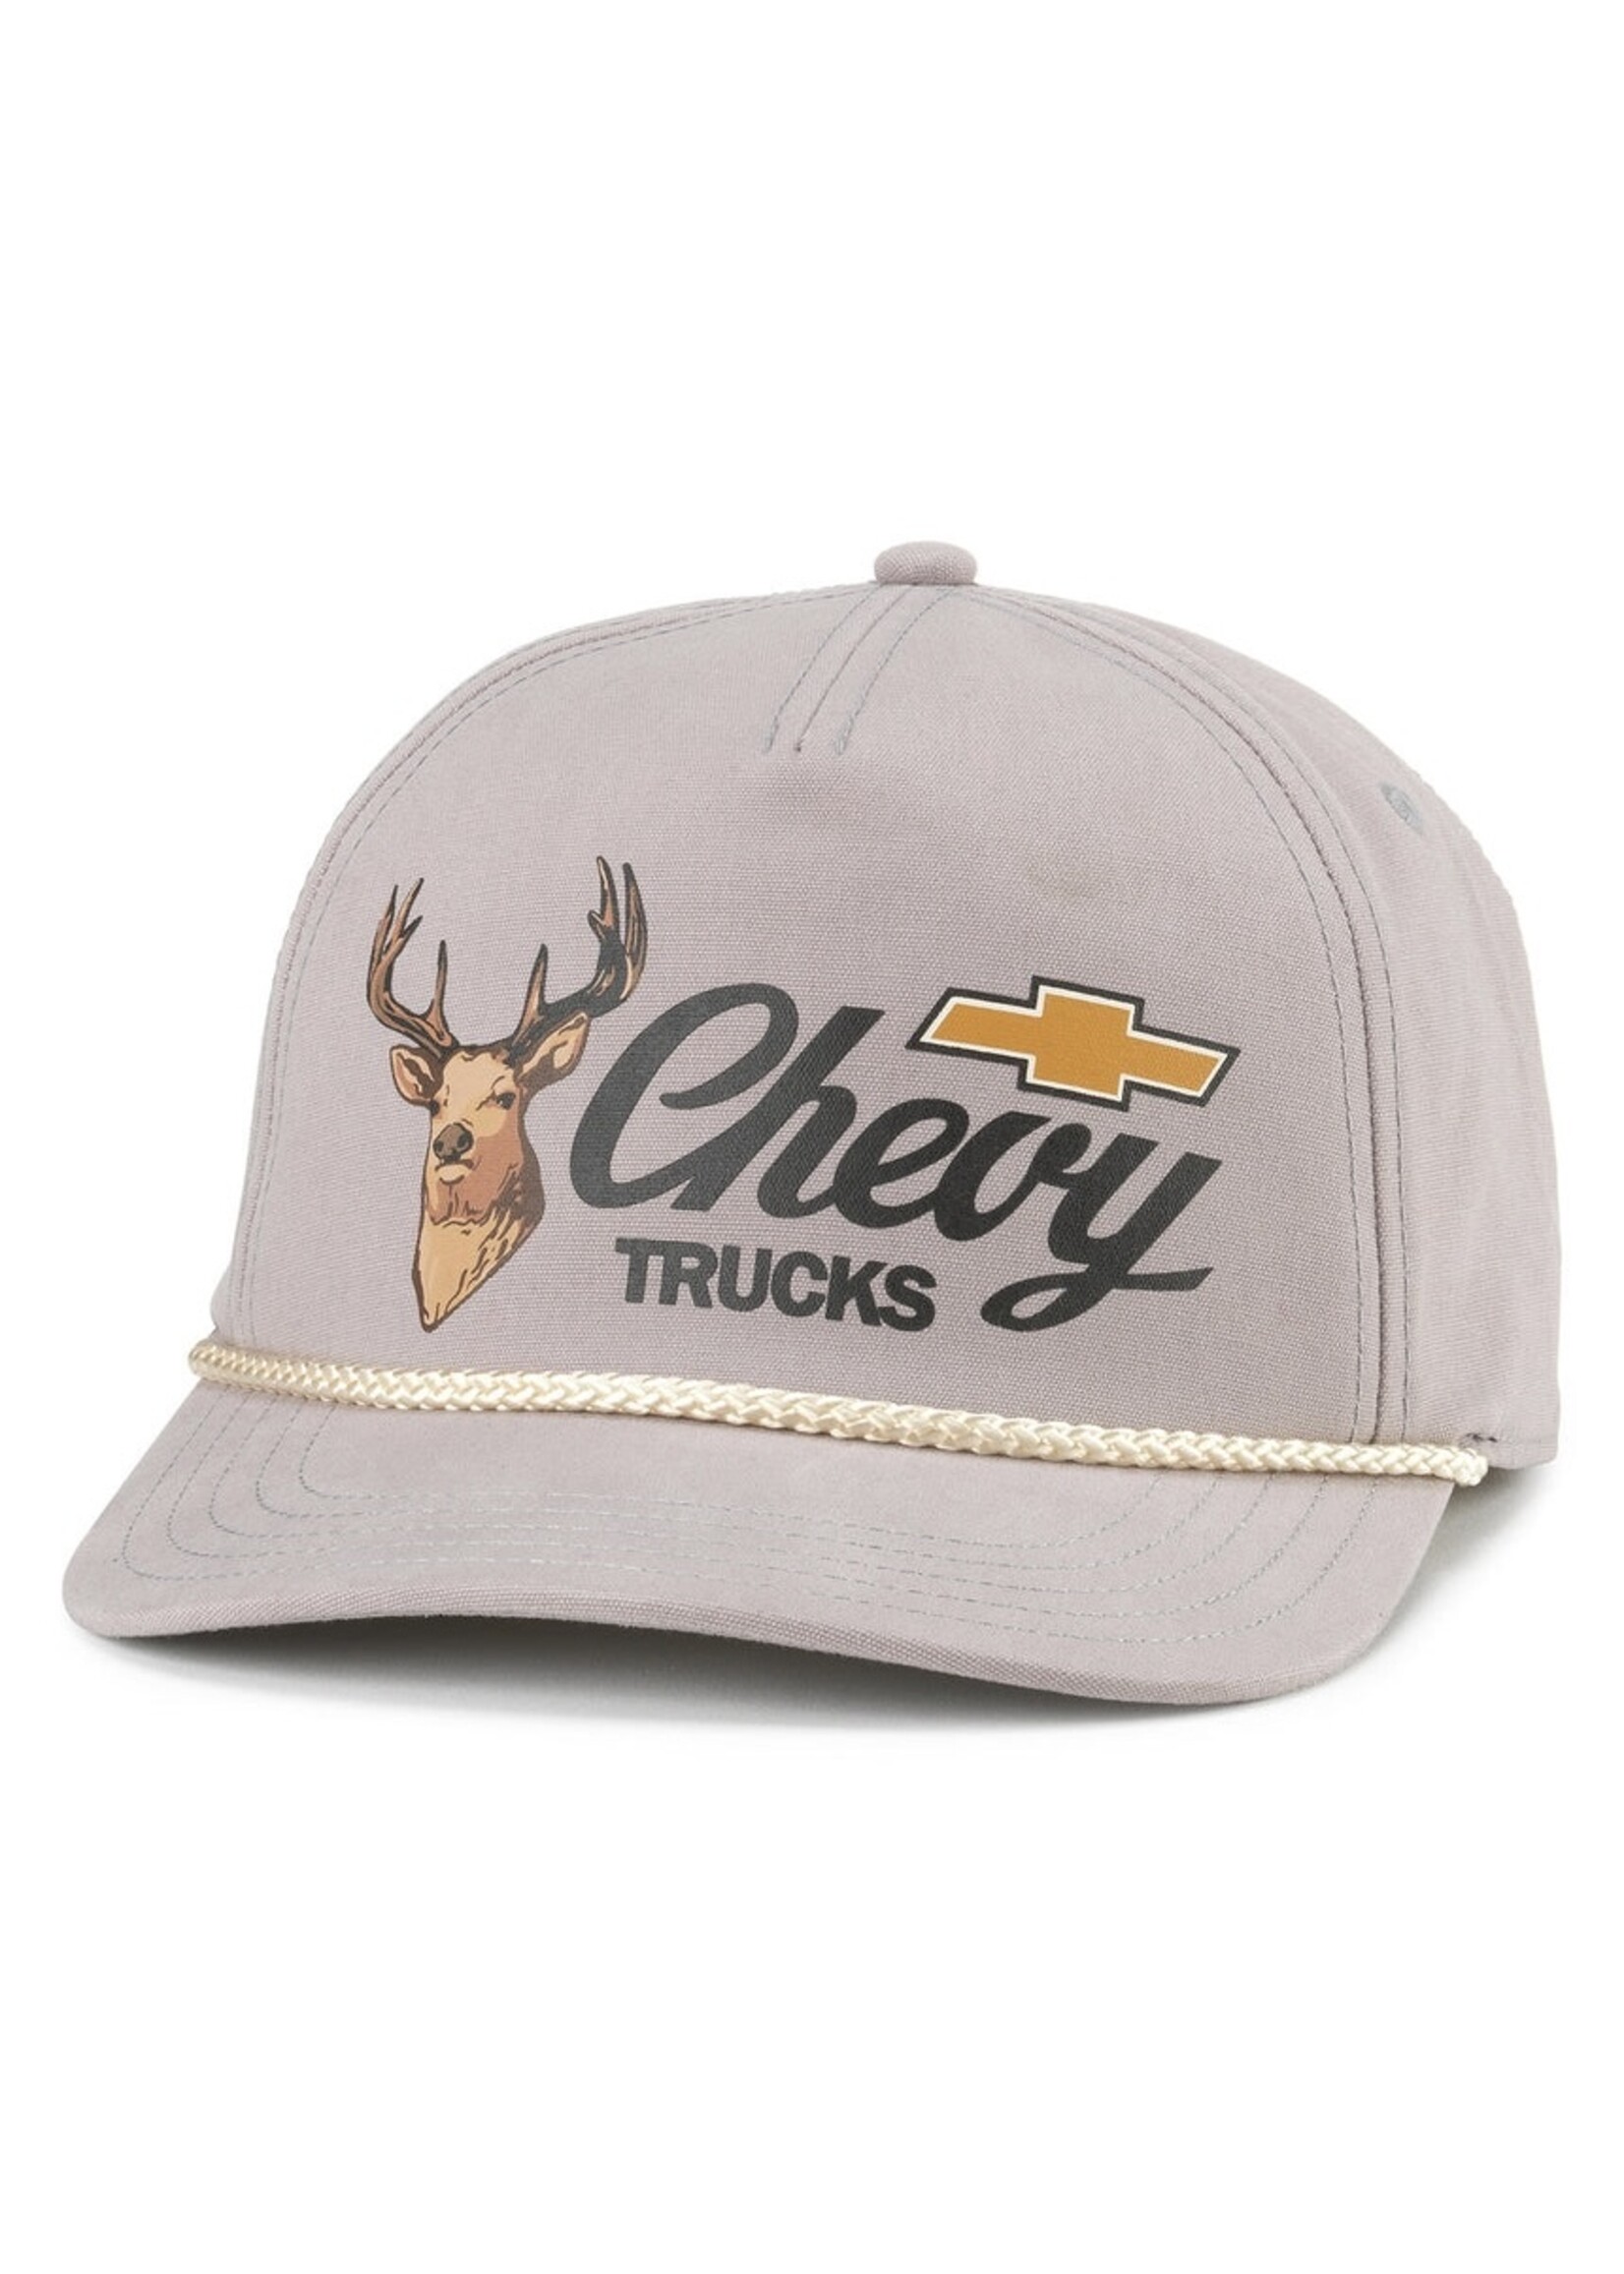 American Needle Chevy Buck Trucks Canvas Cappy